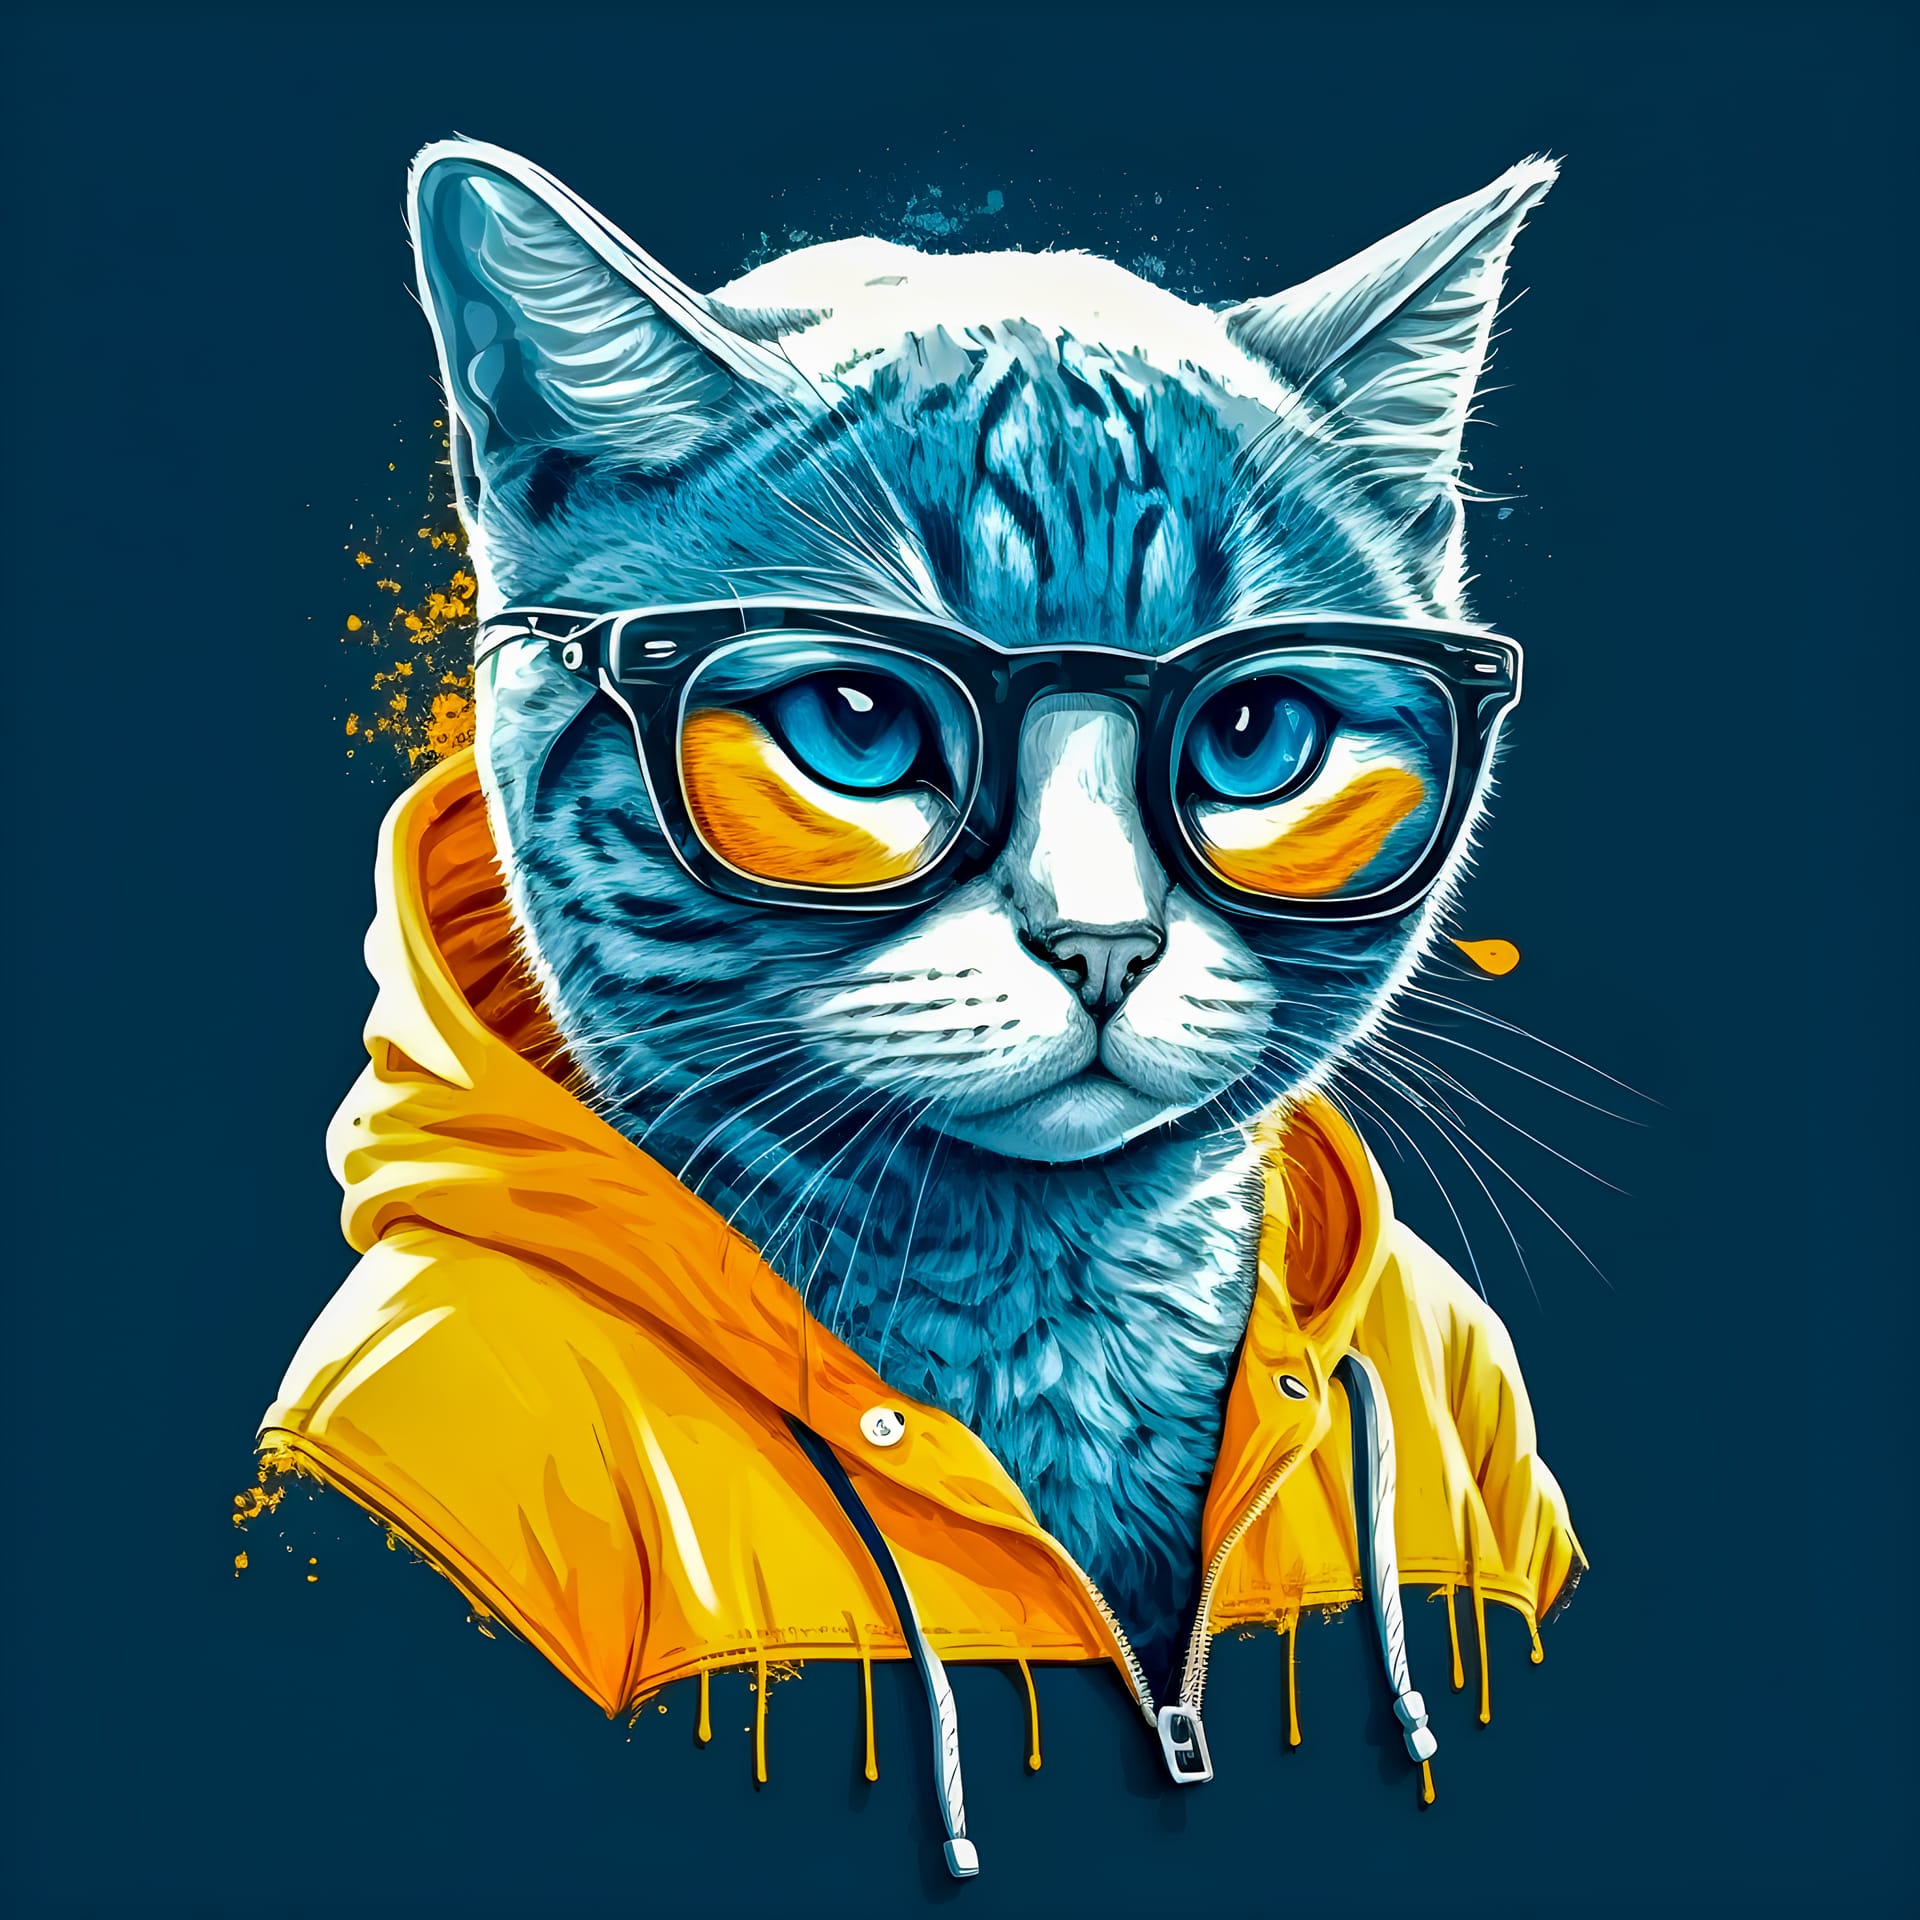 Cute pop art cat profile picture illustration hand drawn excellent image